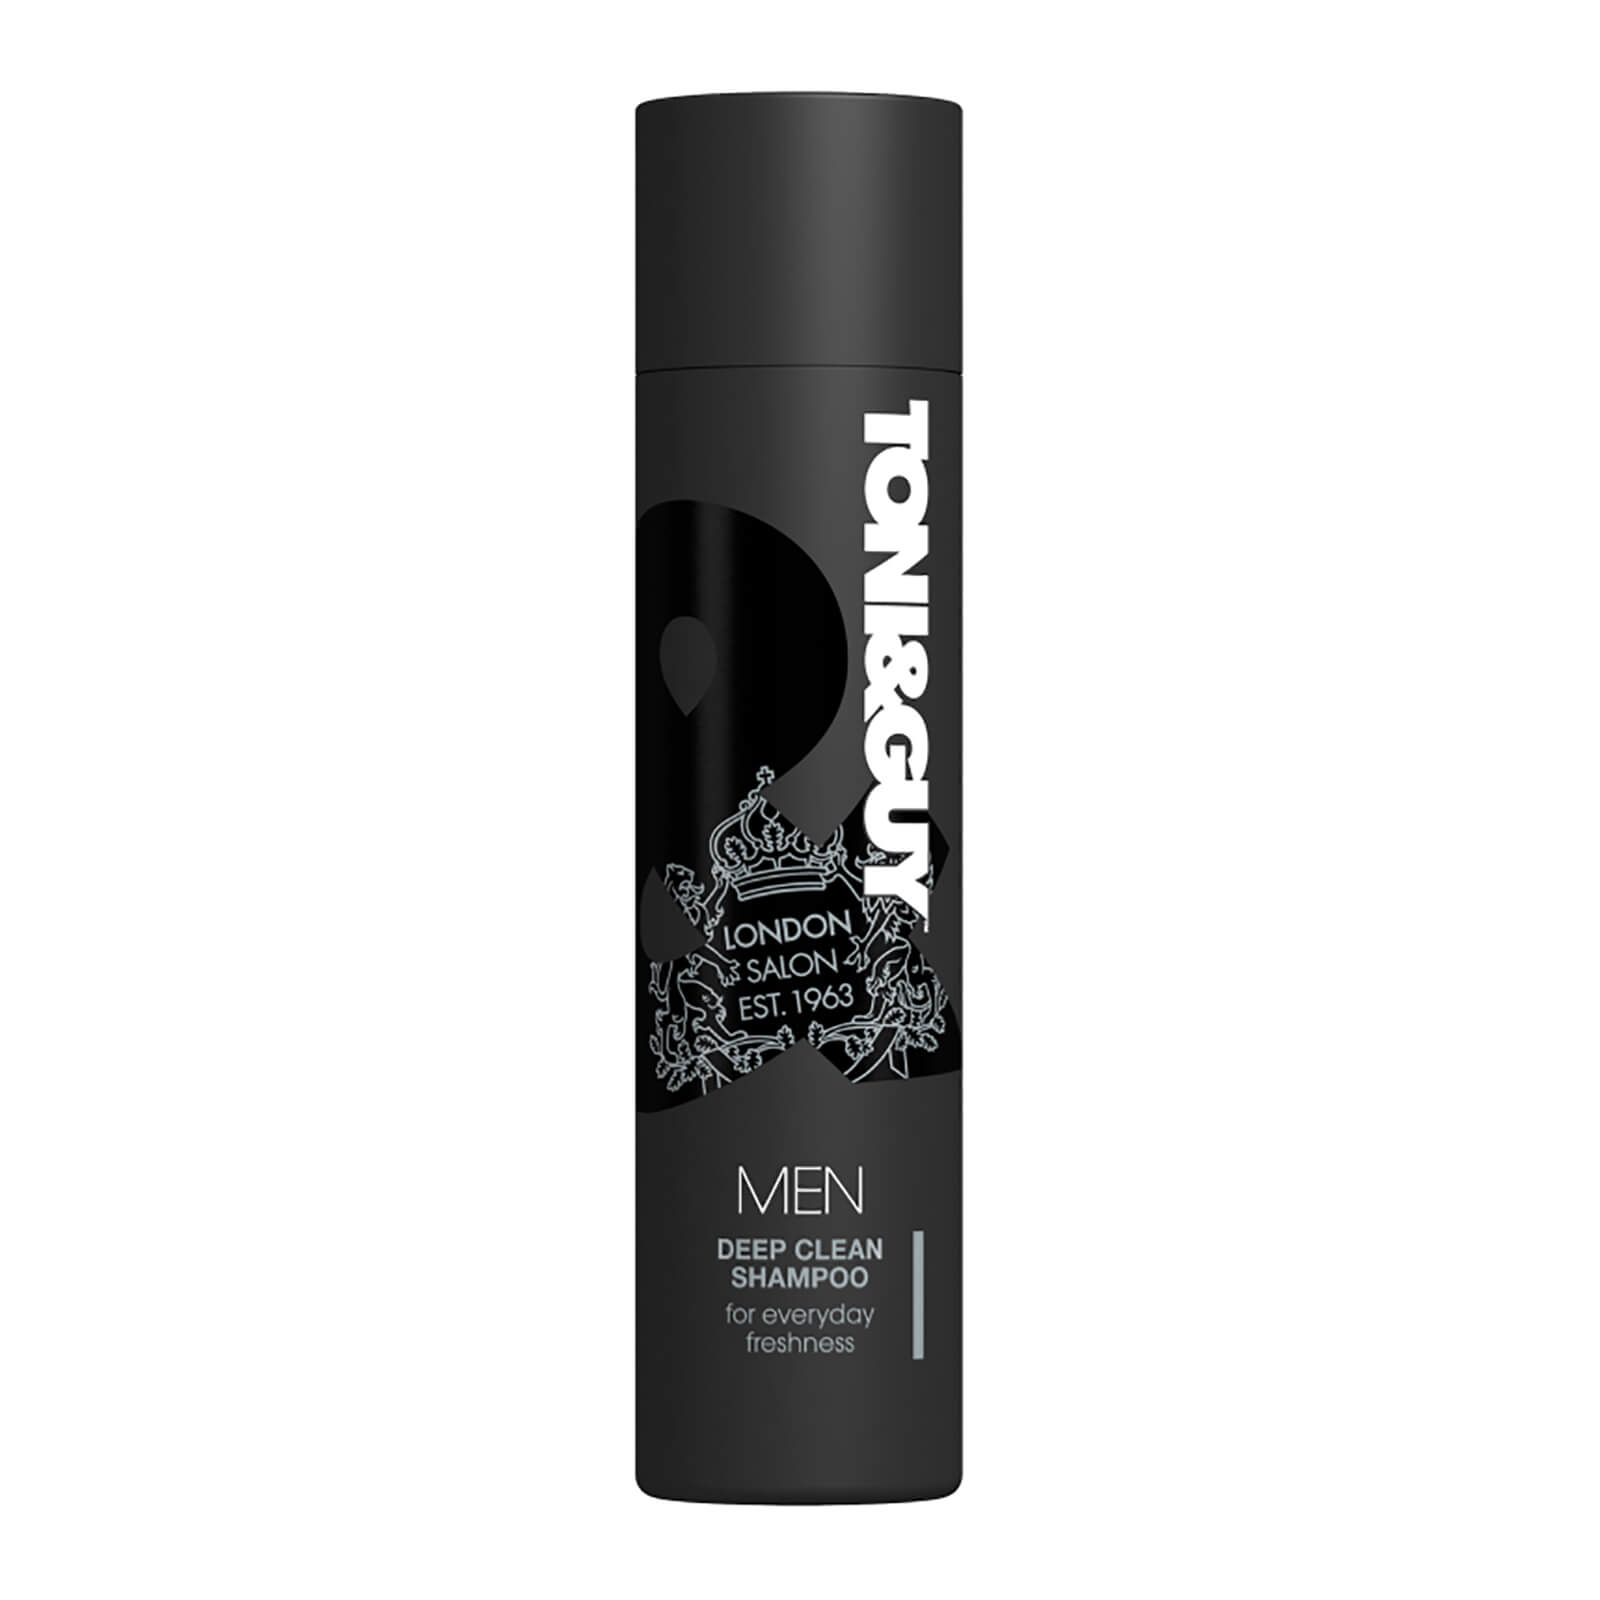 Toni & Guy Men's Deep Clean Shampoo (250ml)